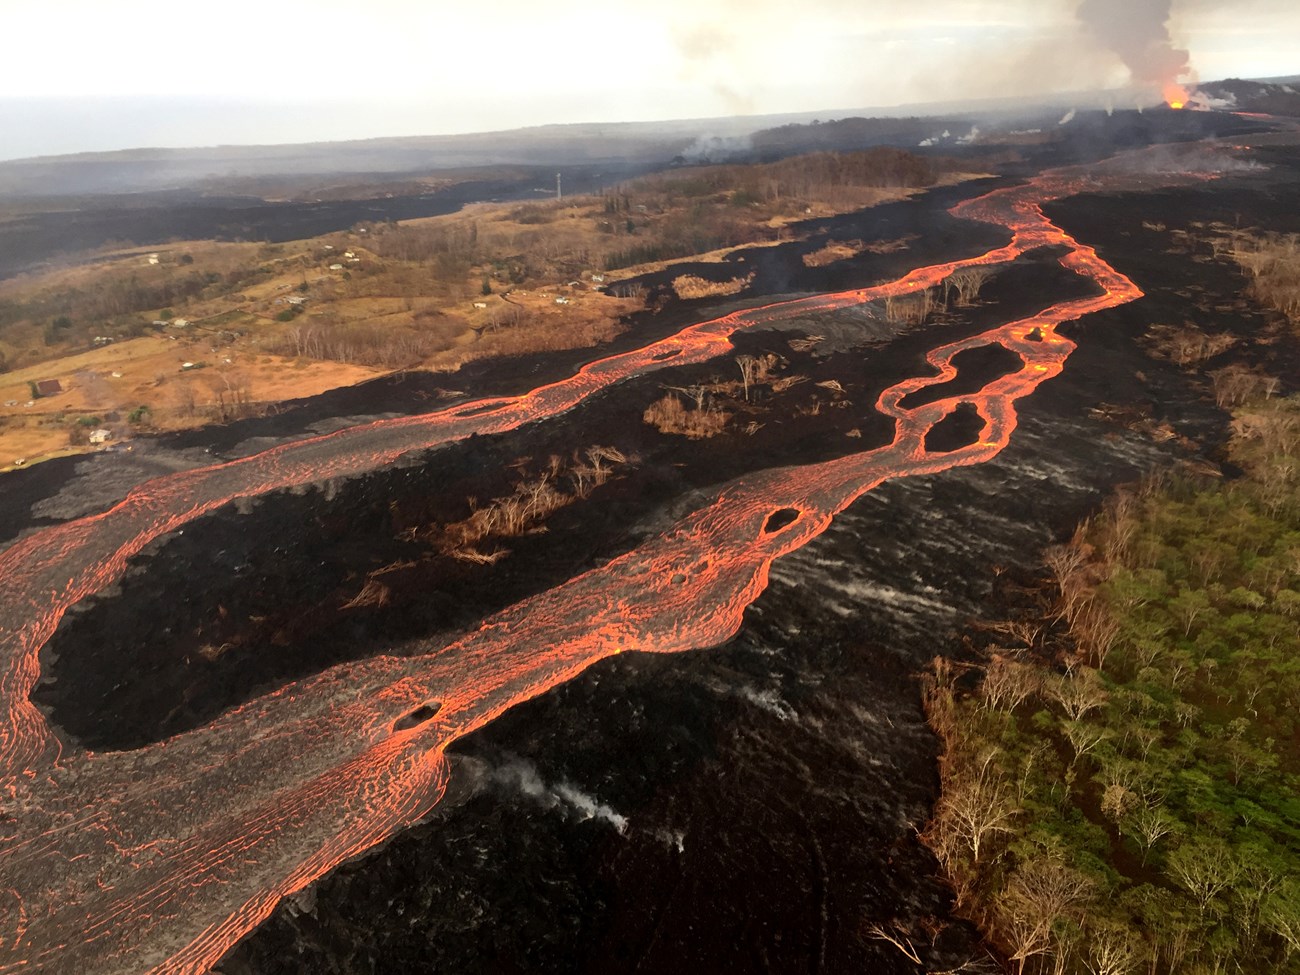 Aerial photo of molten lava flowing across a landscape